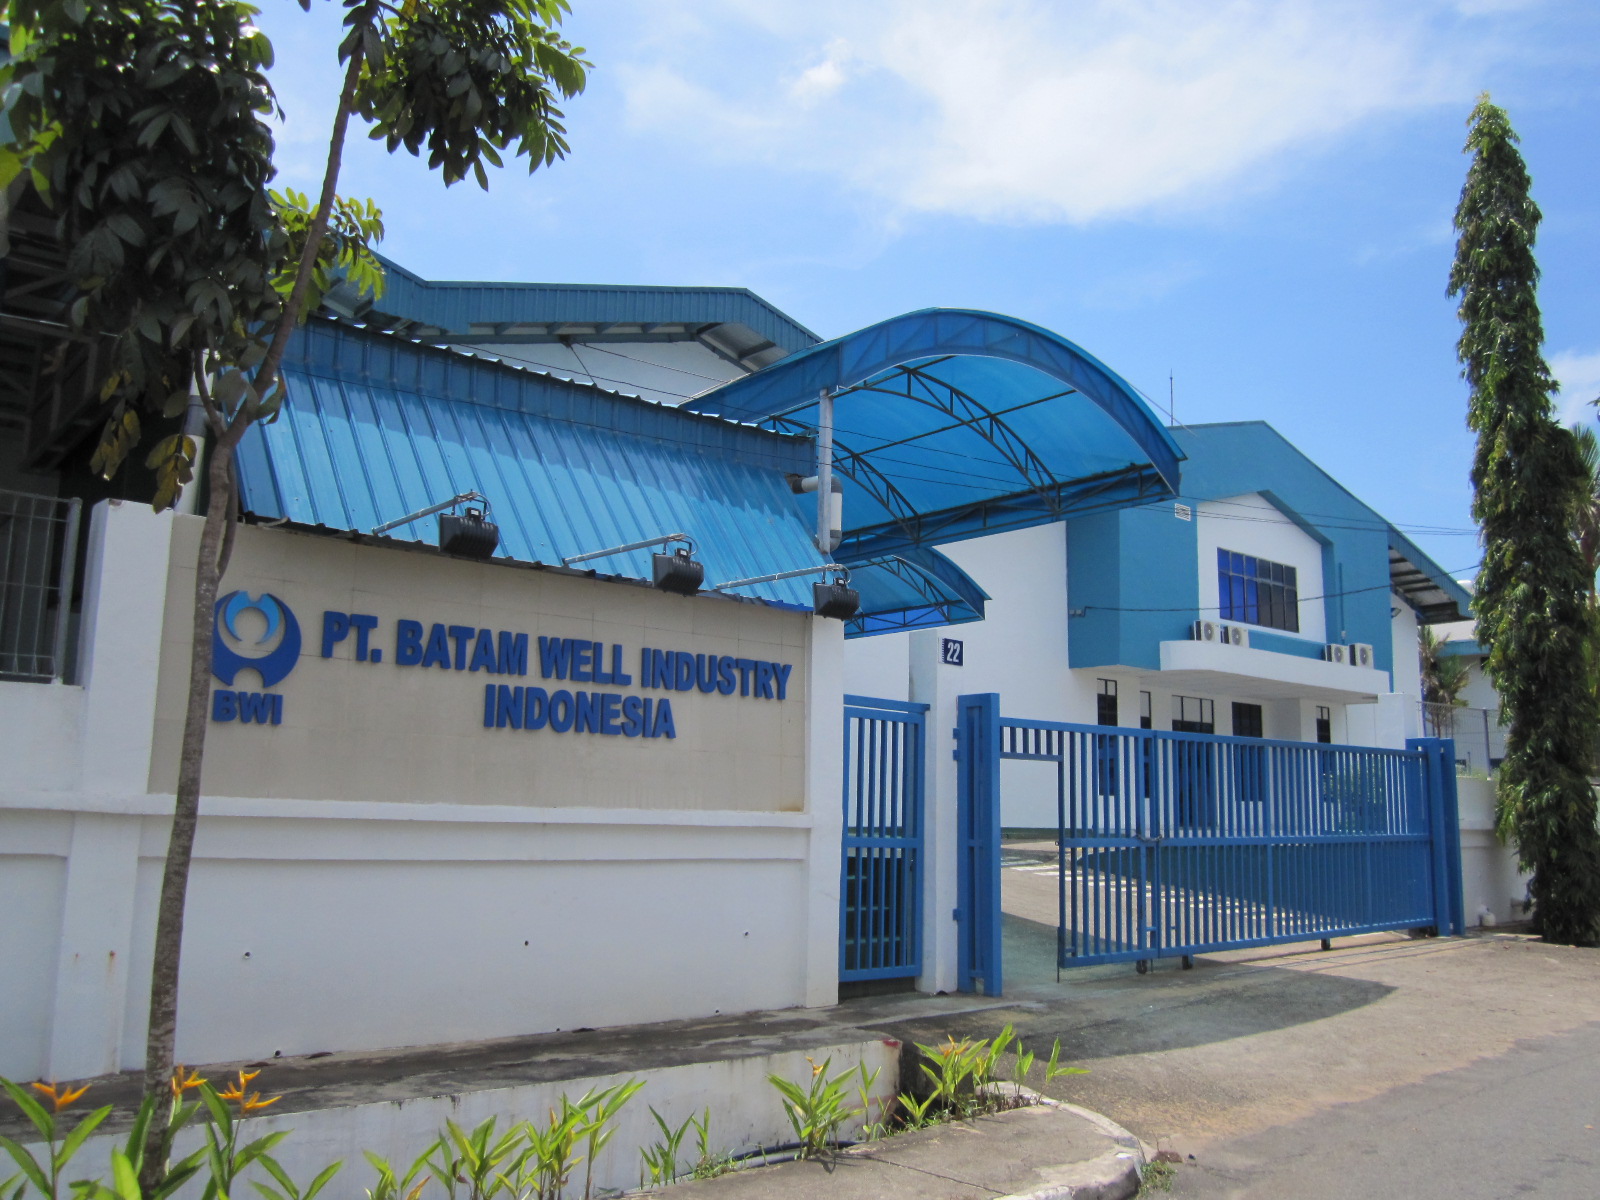 Batam Well Industry